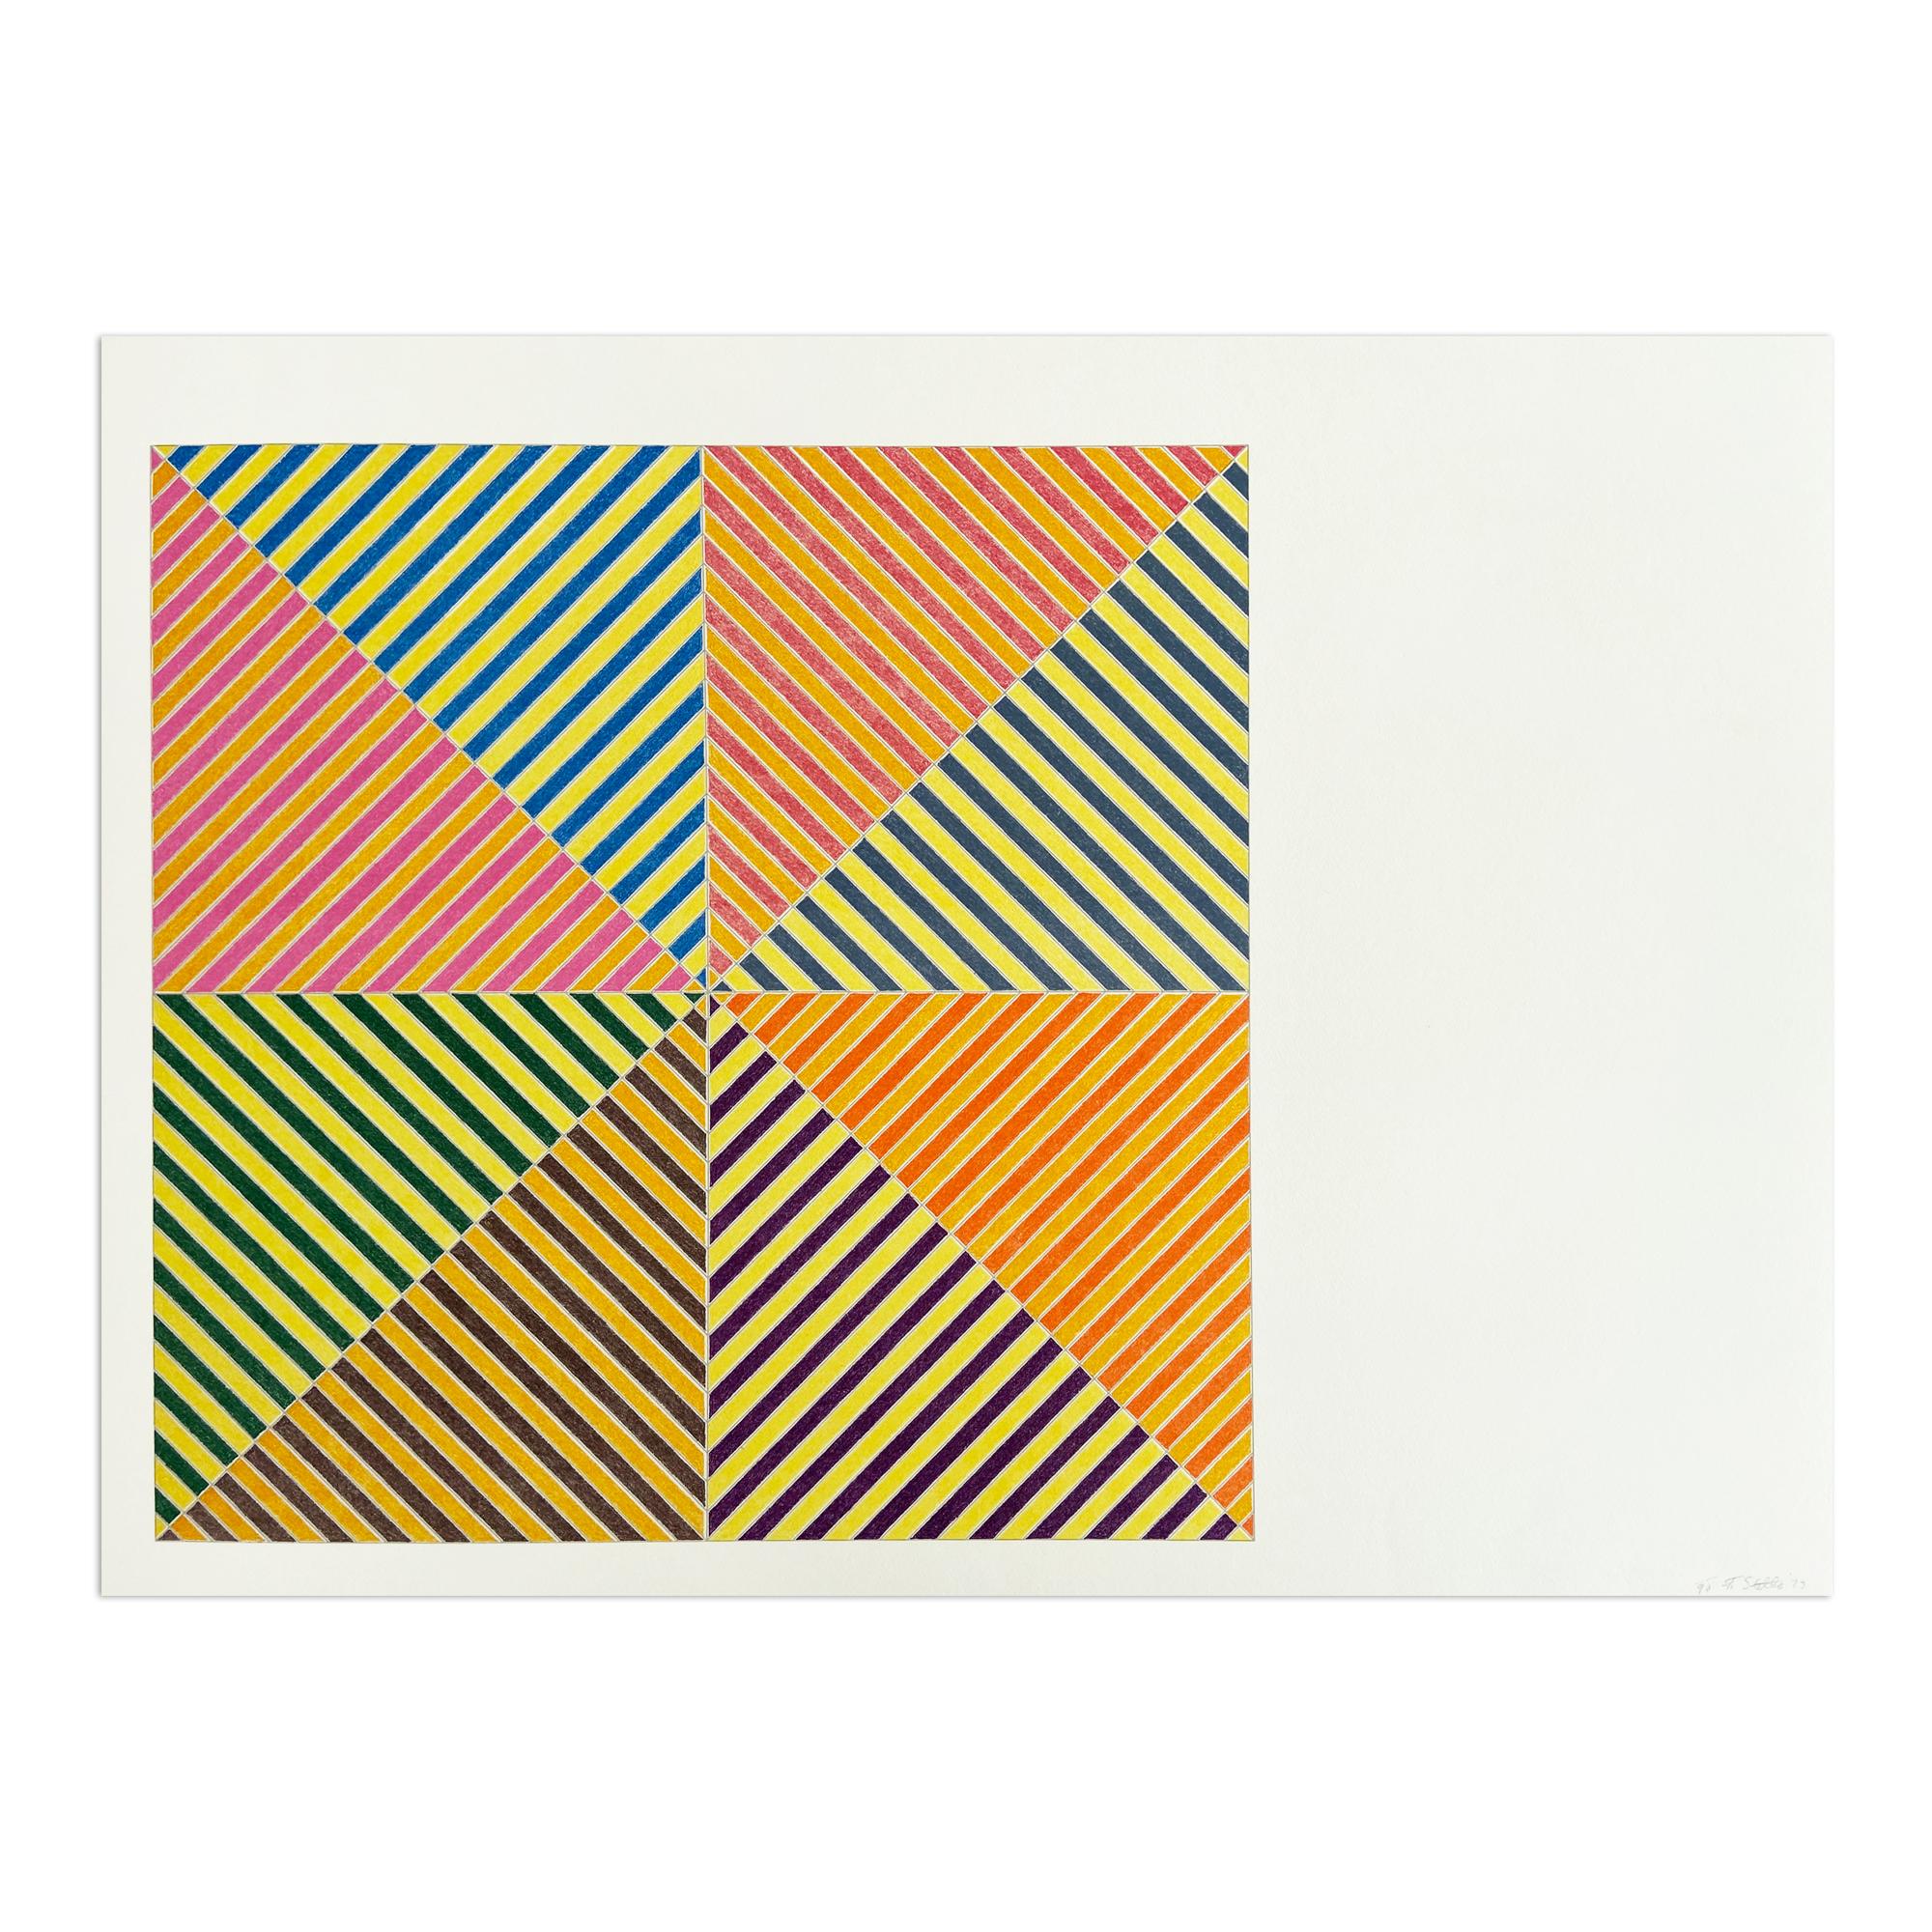 Frank Stella, Sidi Ifni (from Hommage à Picasso) - Signed Print, Minimalism